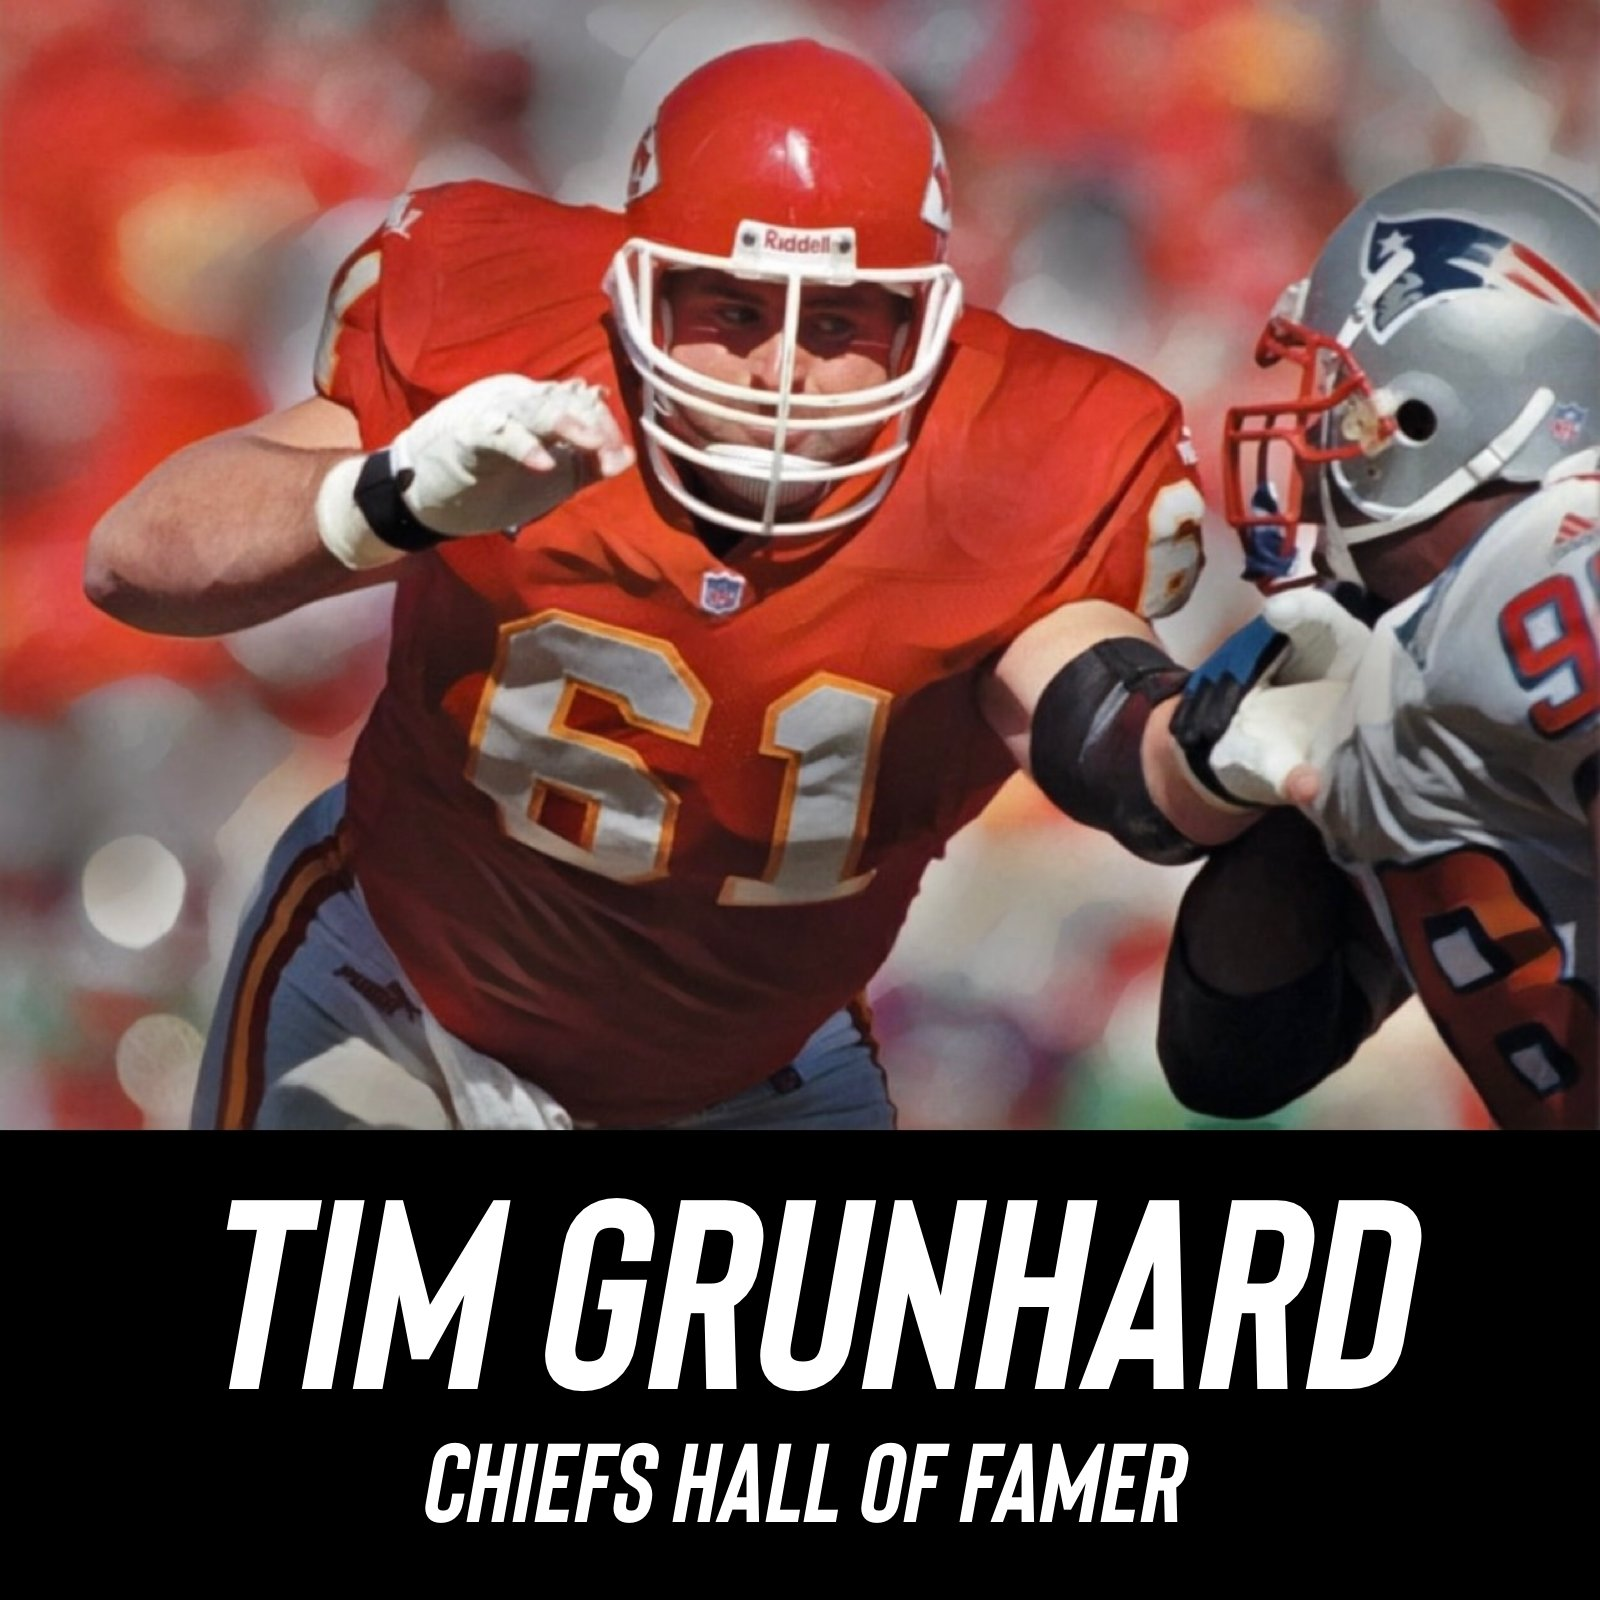 H2: Tim Grunhard